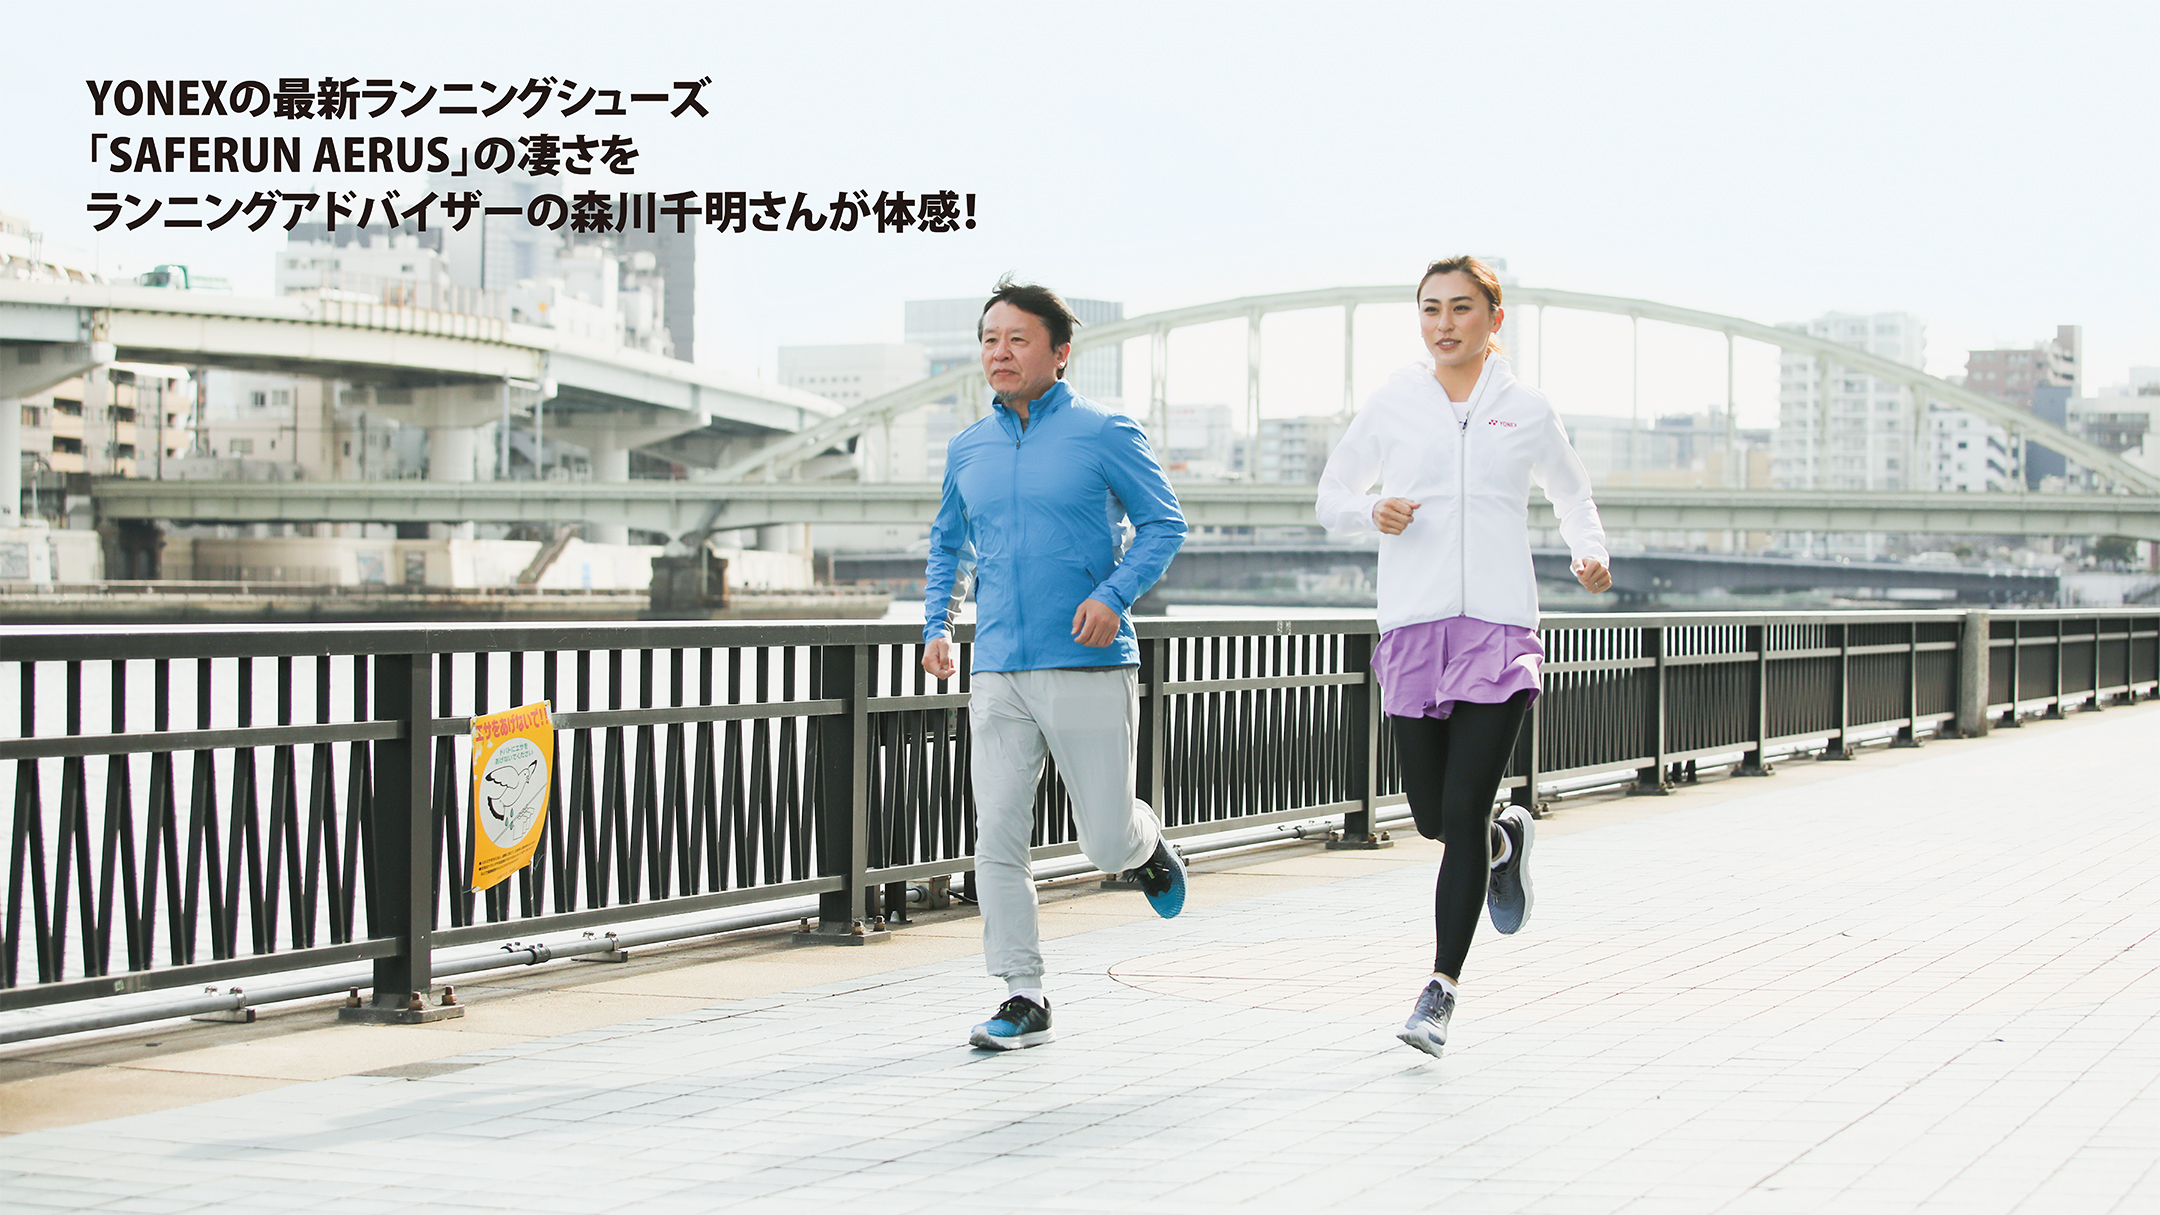 Runners Pulse